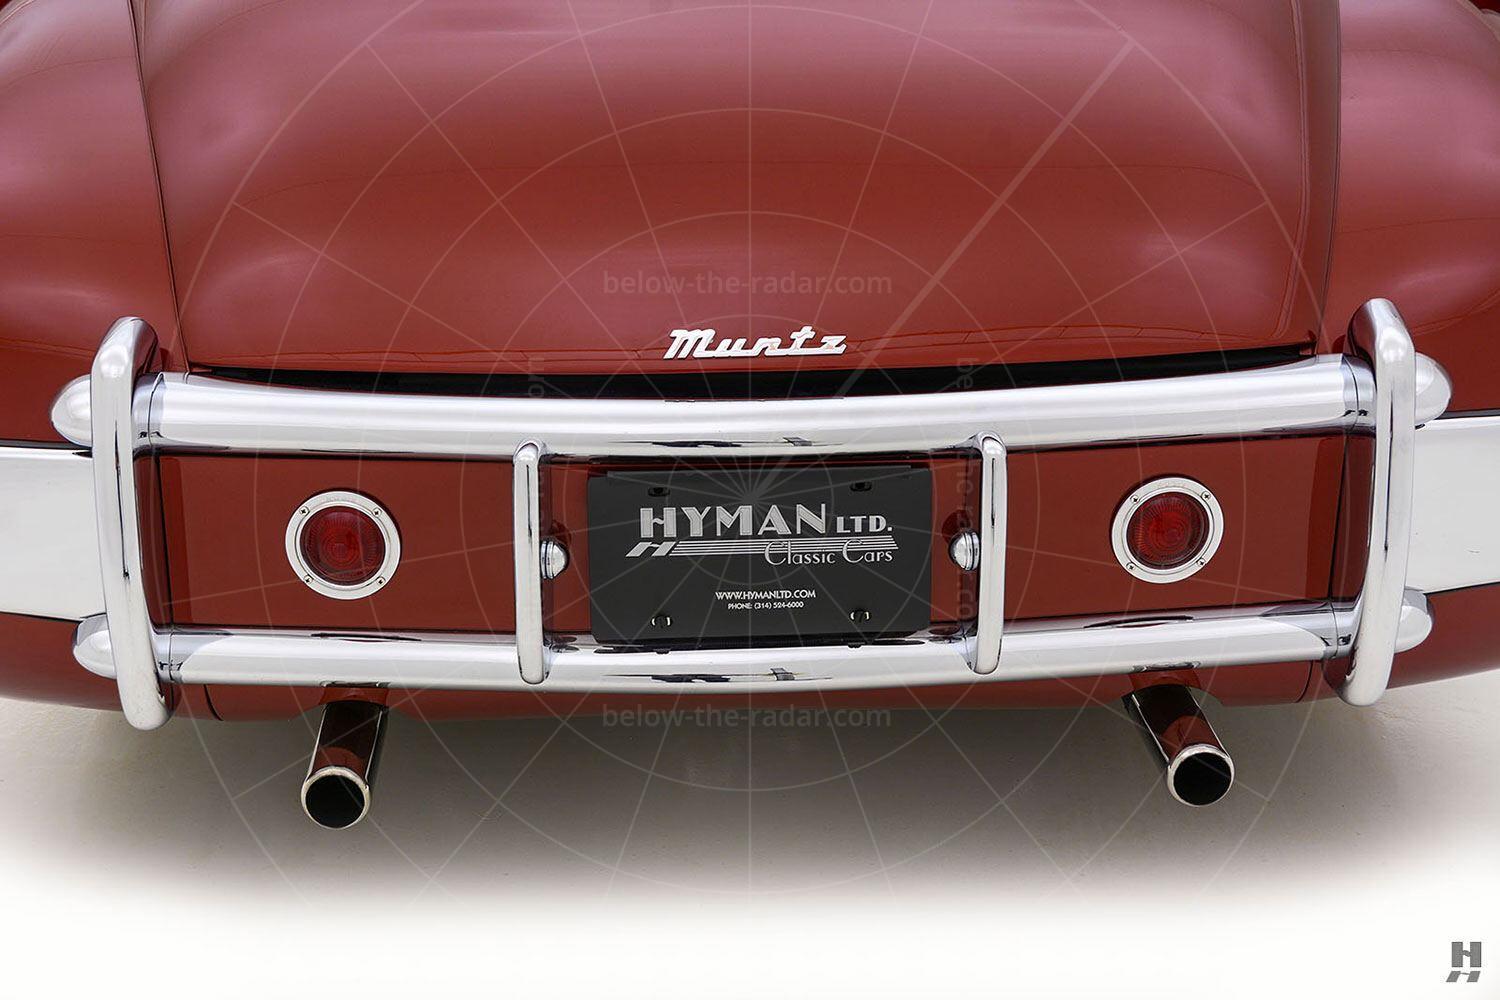 Muntz Jet Pic: Hyman Ltd | Muntz Jet